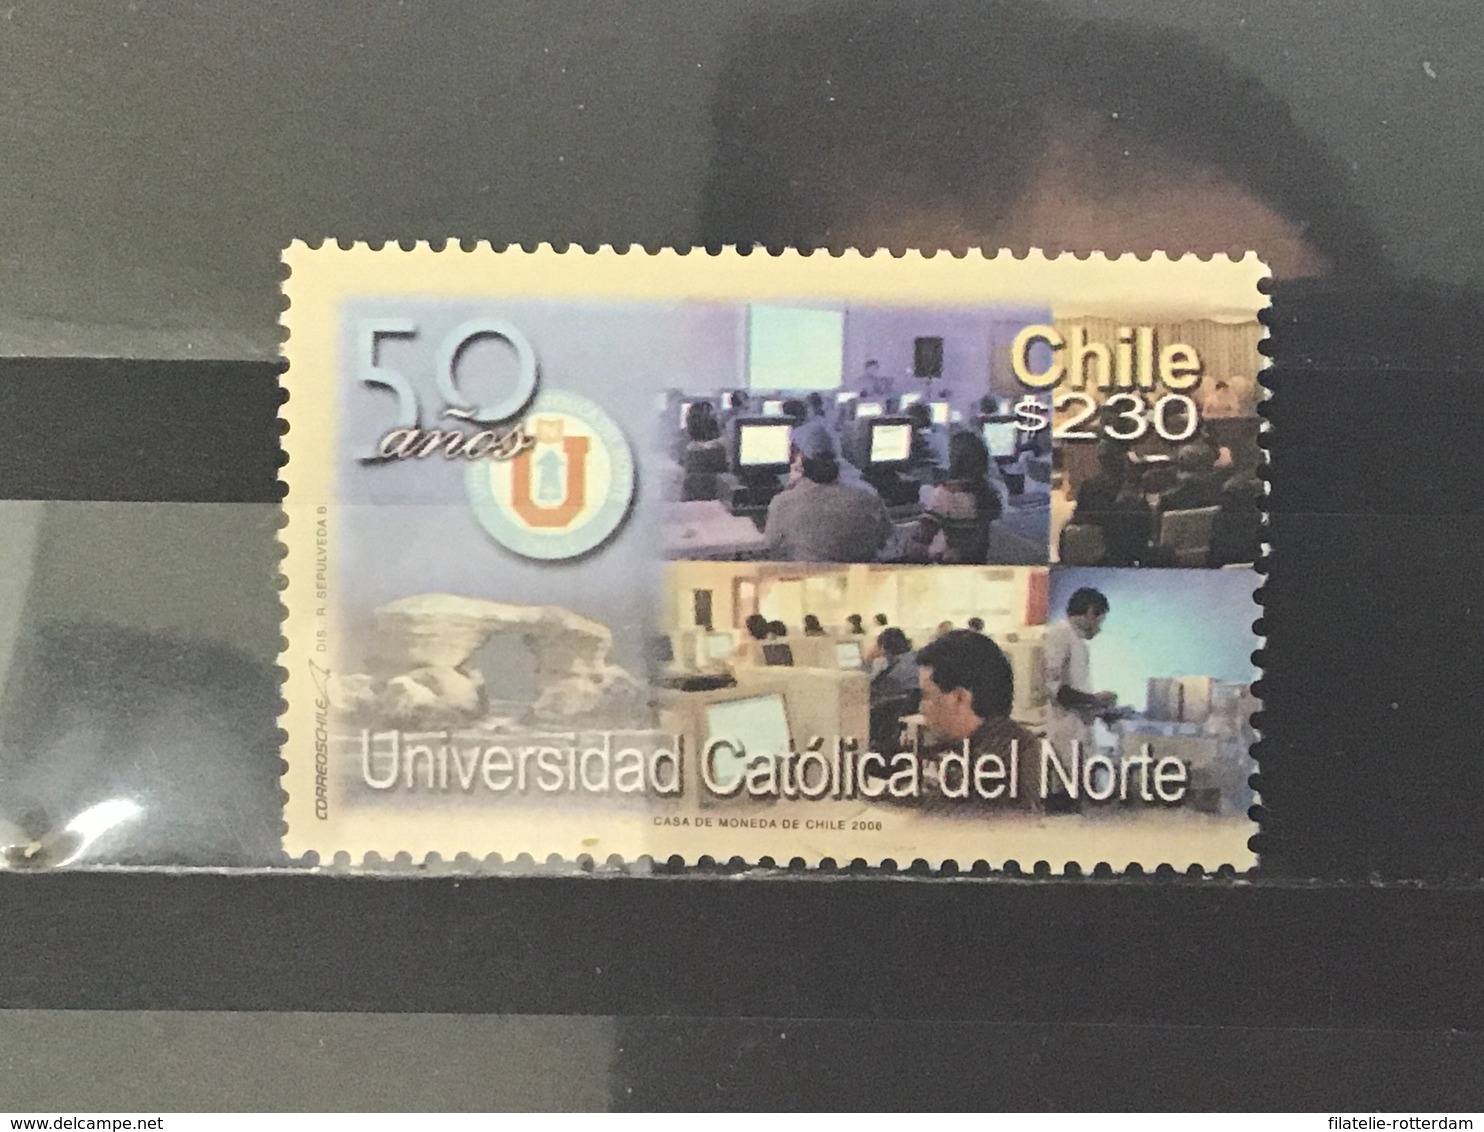 Chili / Chile - 50 Jaar Universiteit (230) 2006 - Chili